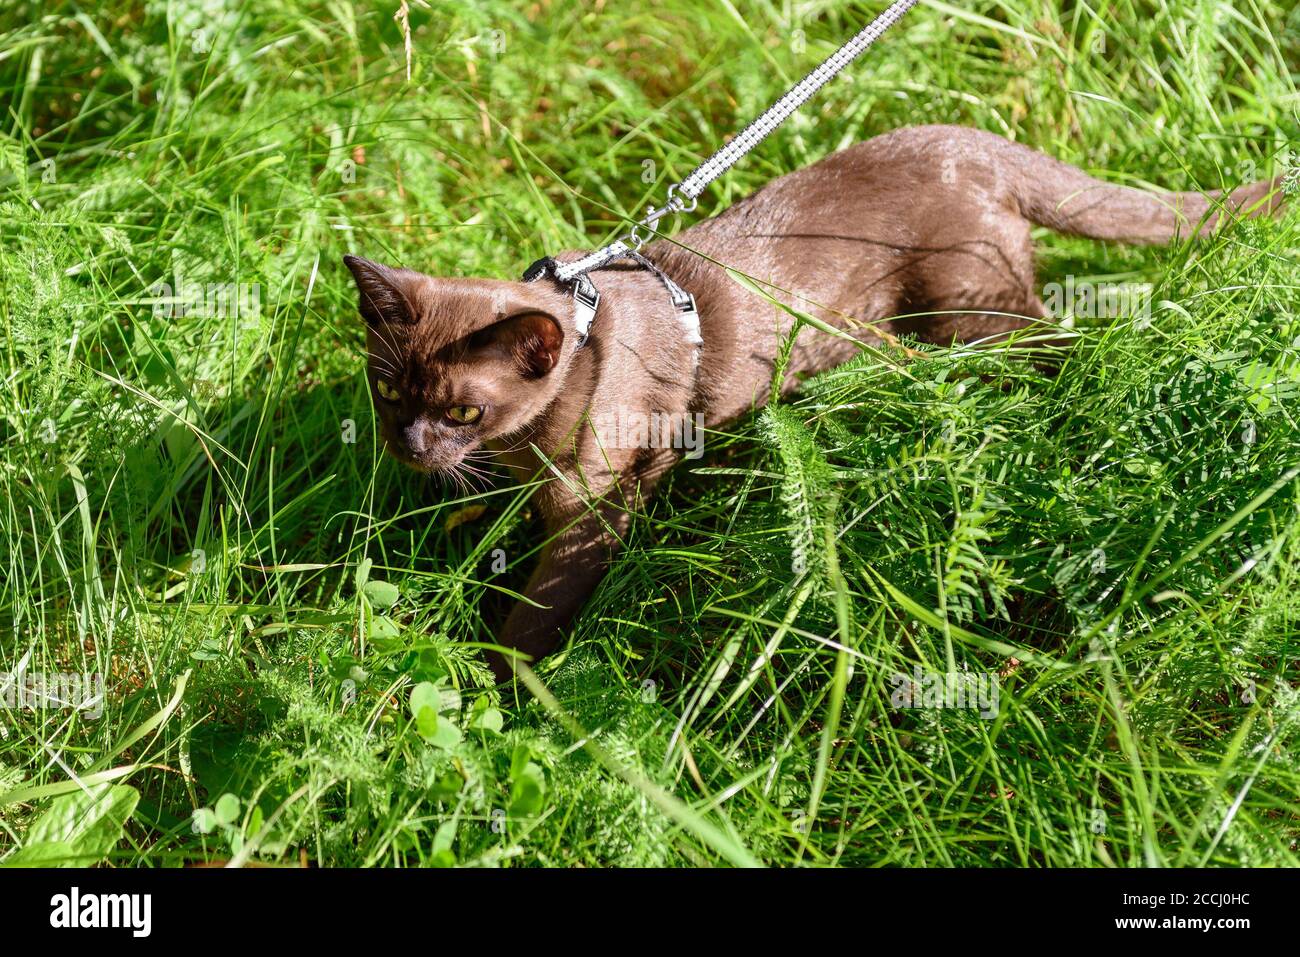 Burmese cat with leash walking outside, collared pet, kitten wandering outdoor adventure in park or garden. Burma cat wearing harness goes on grass in Stock Photo